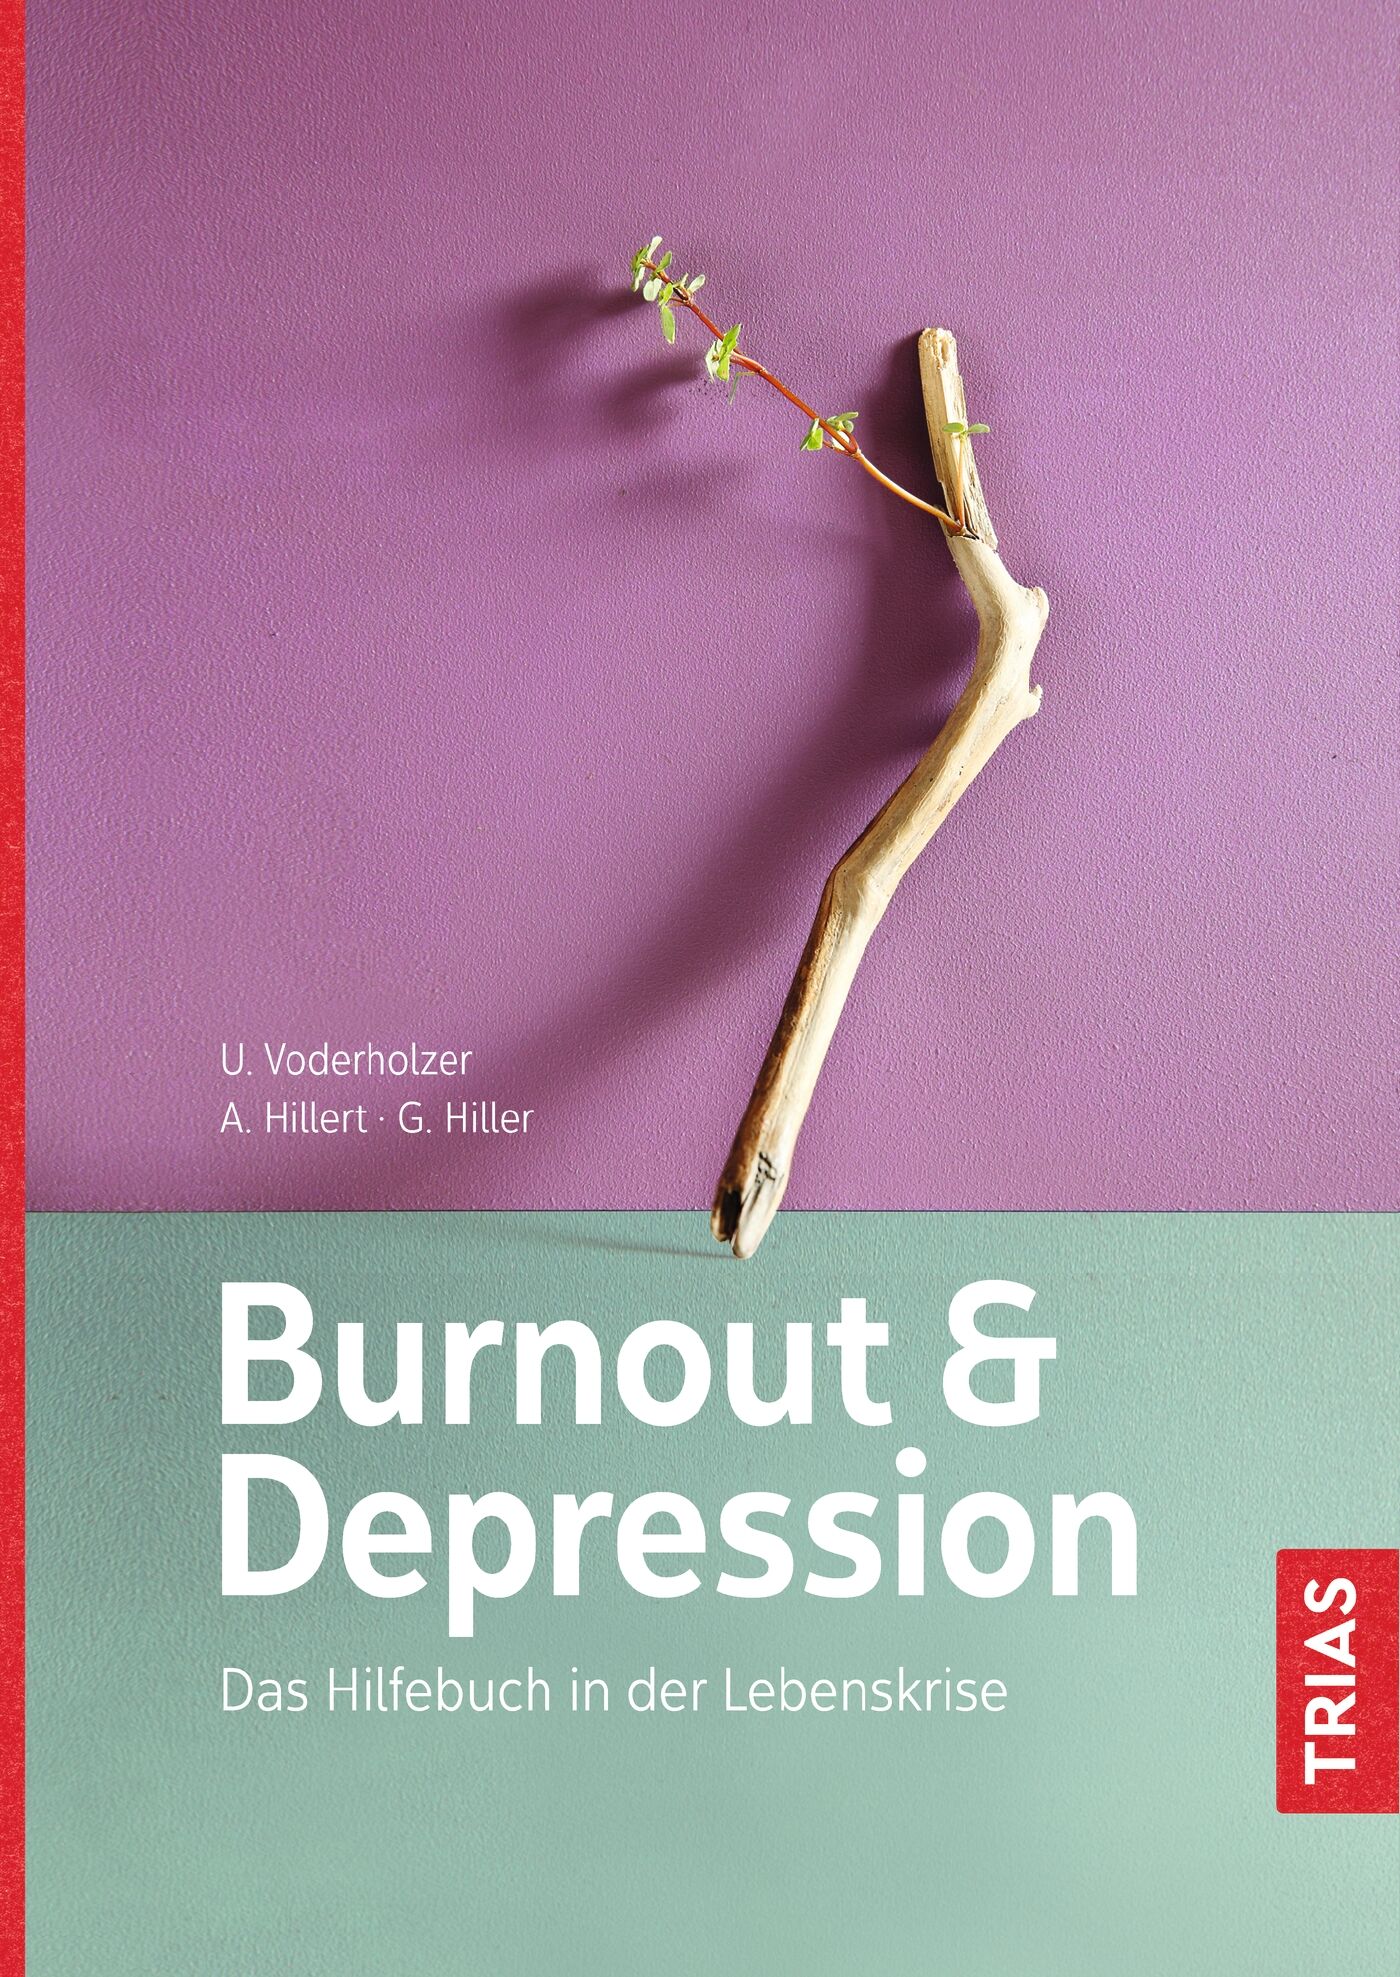 Burnout & Depression, 9783432103358